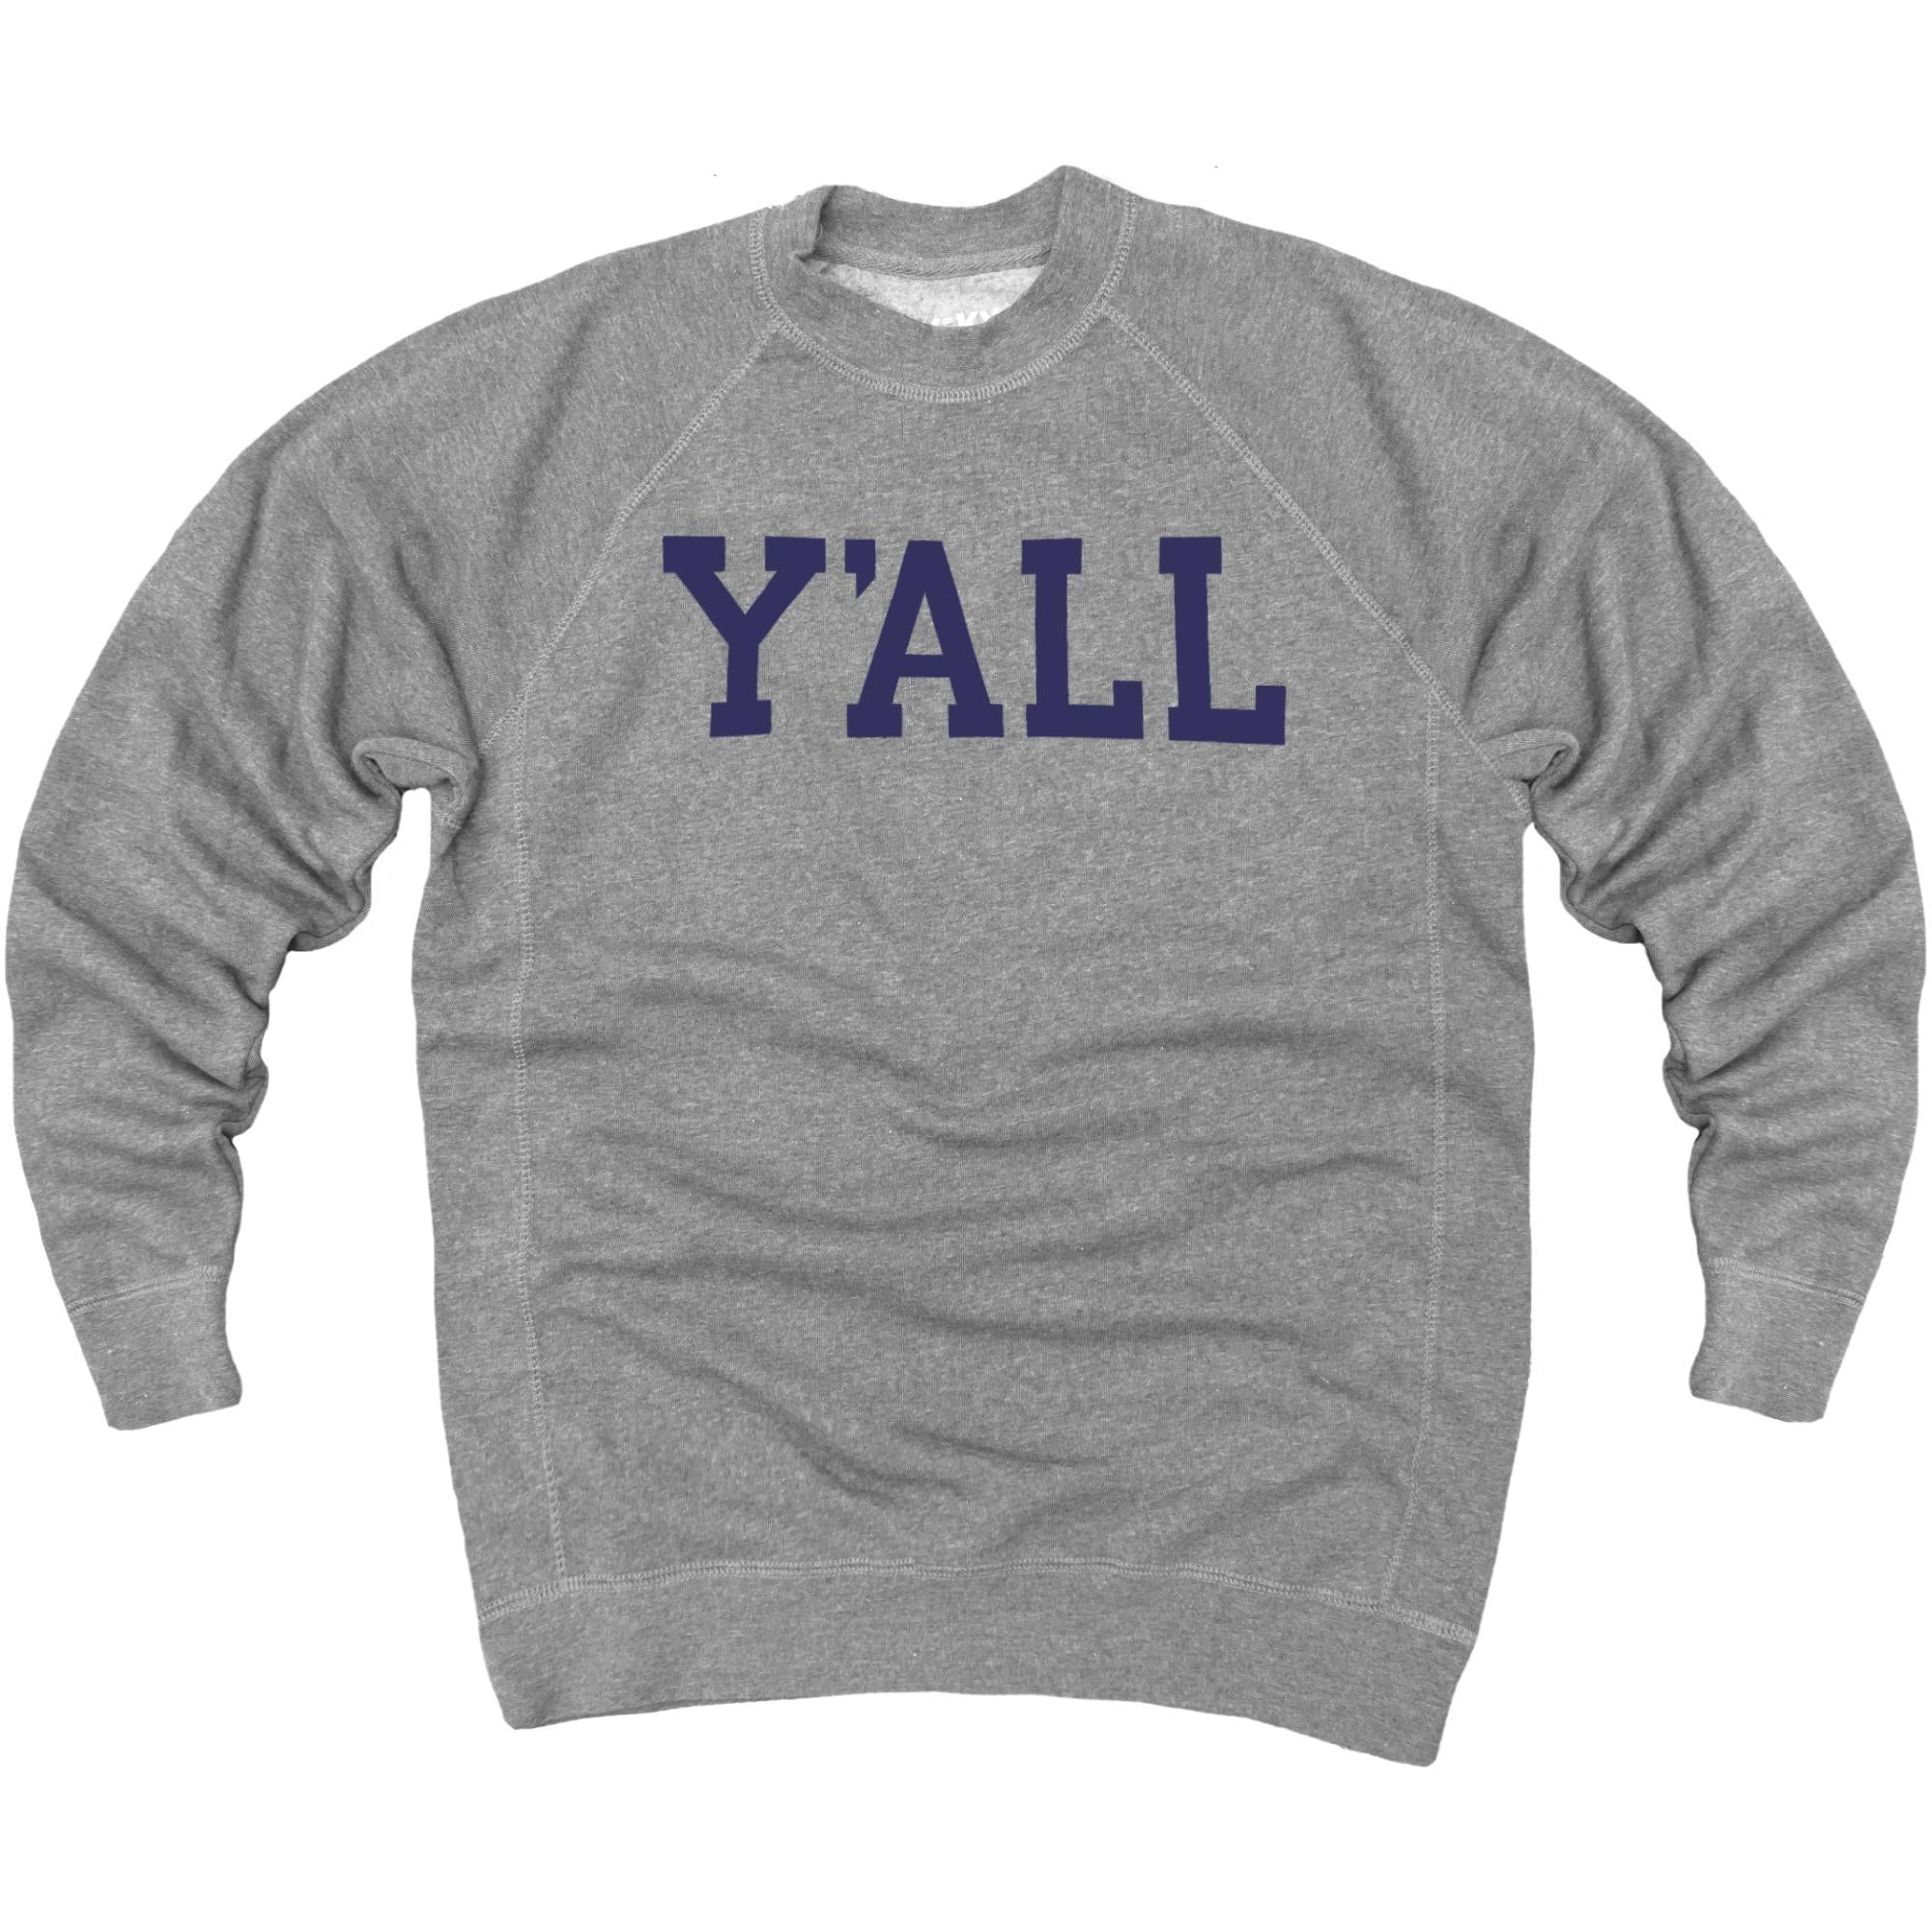 Y'ALL Sweatshirt (Grey)-Sweatshirt-KY for KY Store